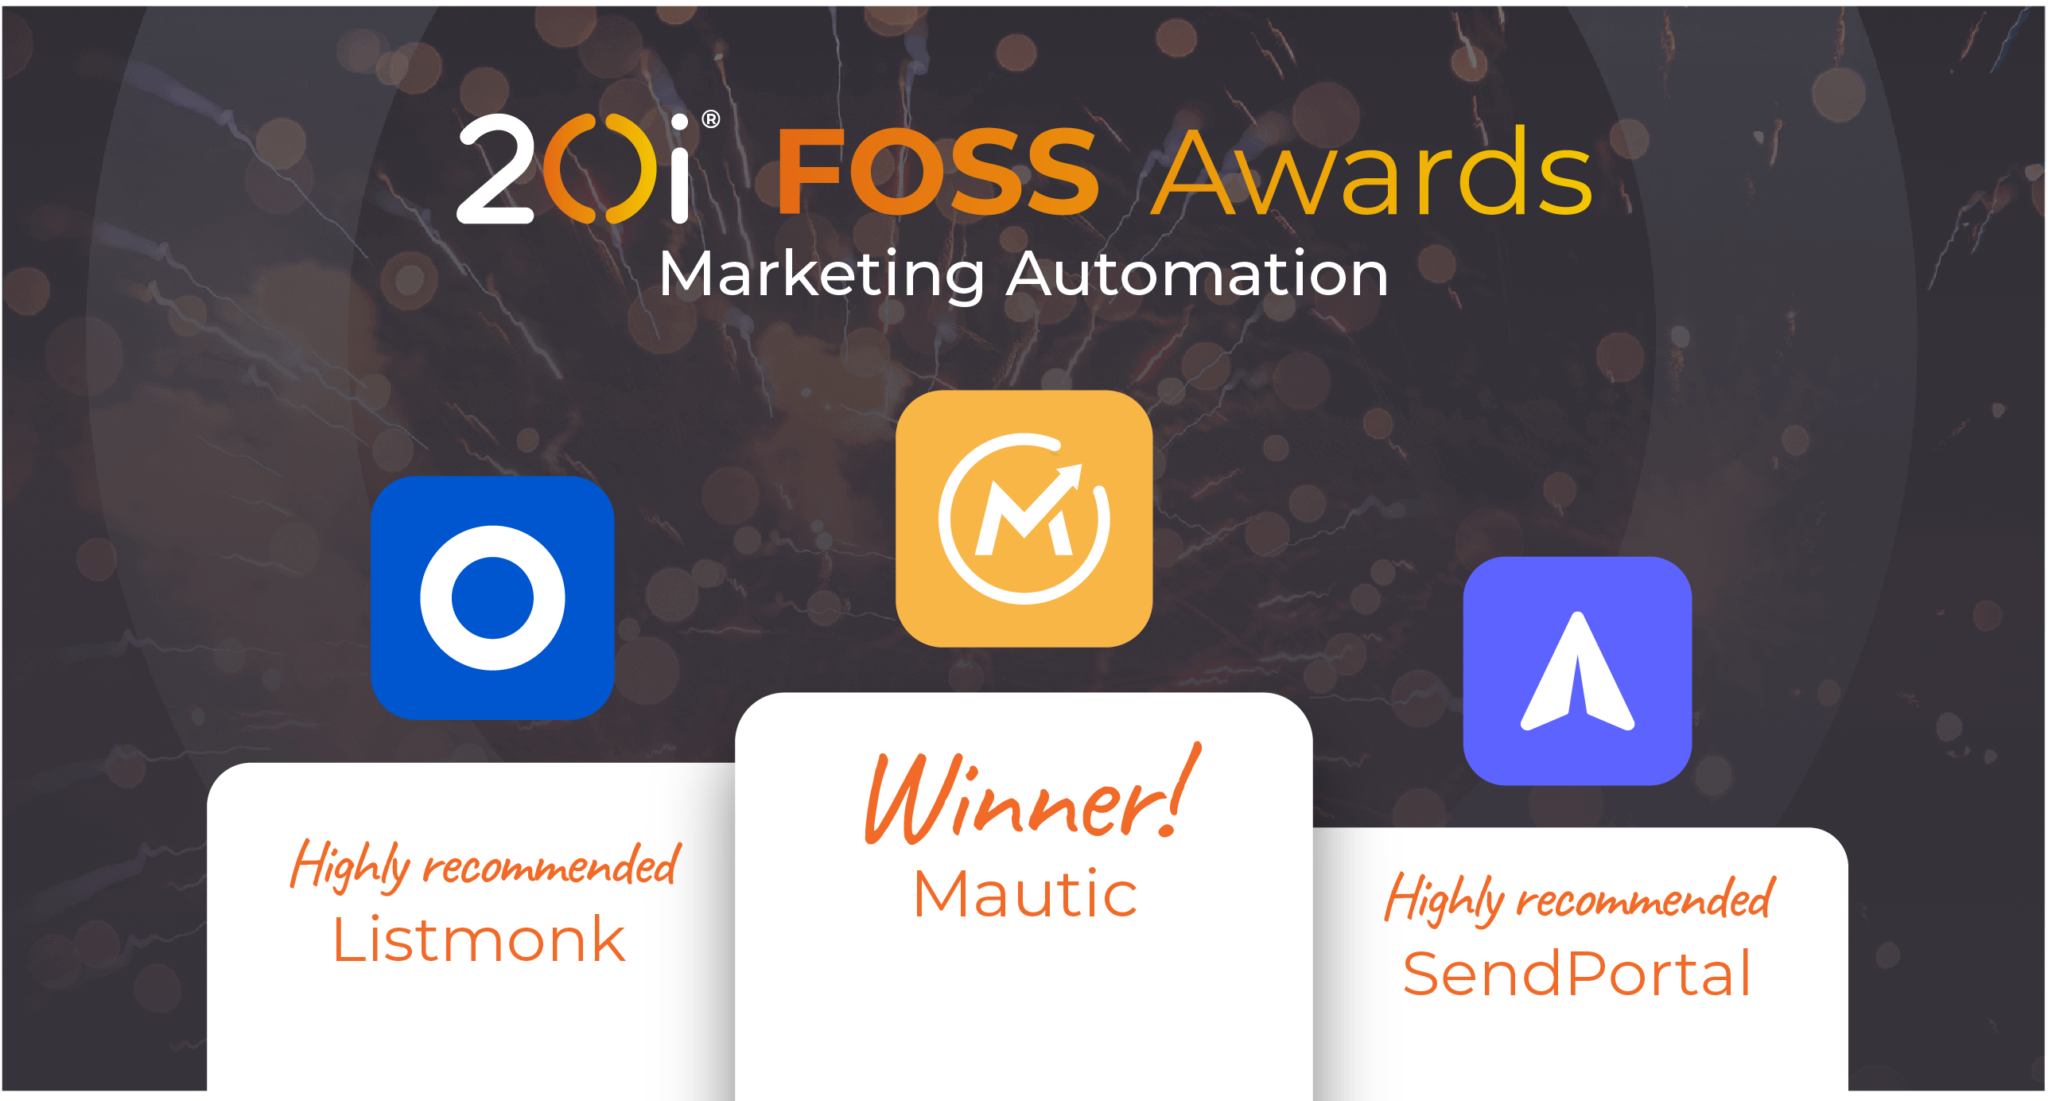 20i foss awards winners 2023 - marketing automation category